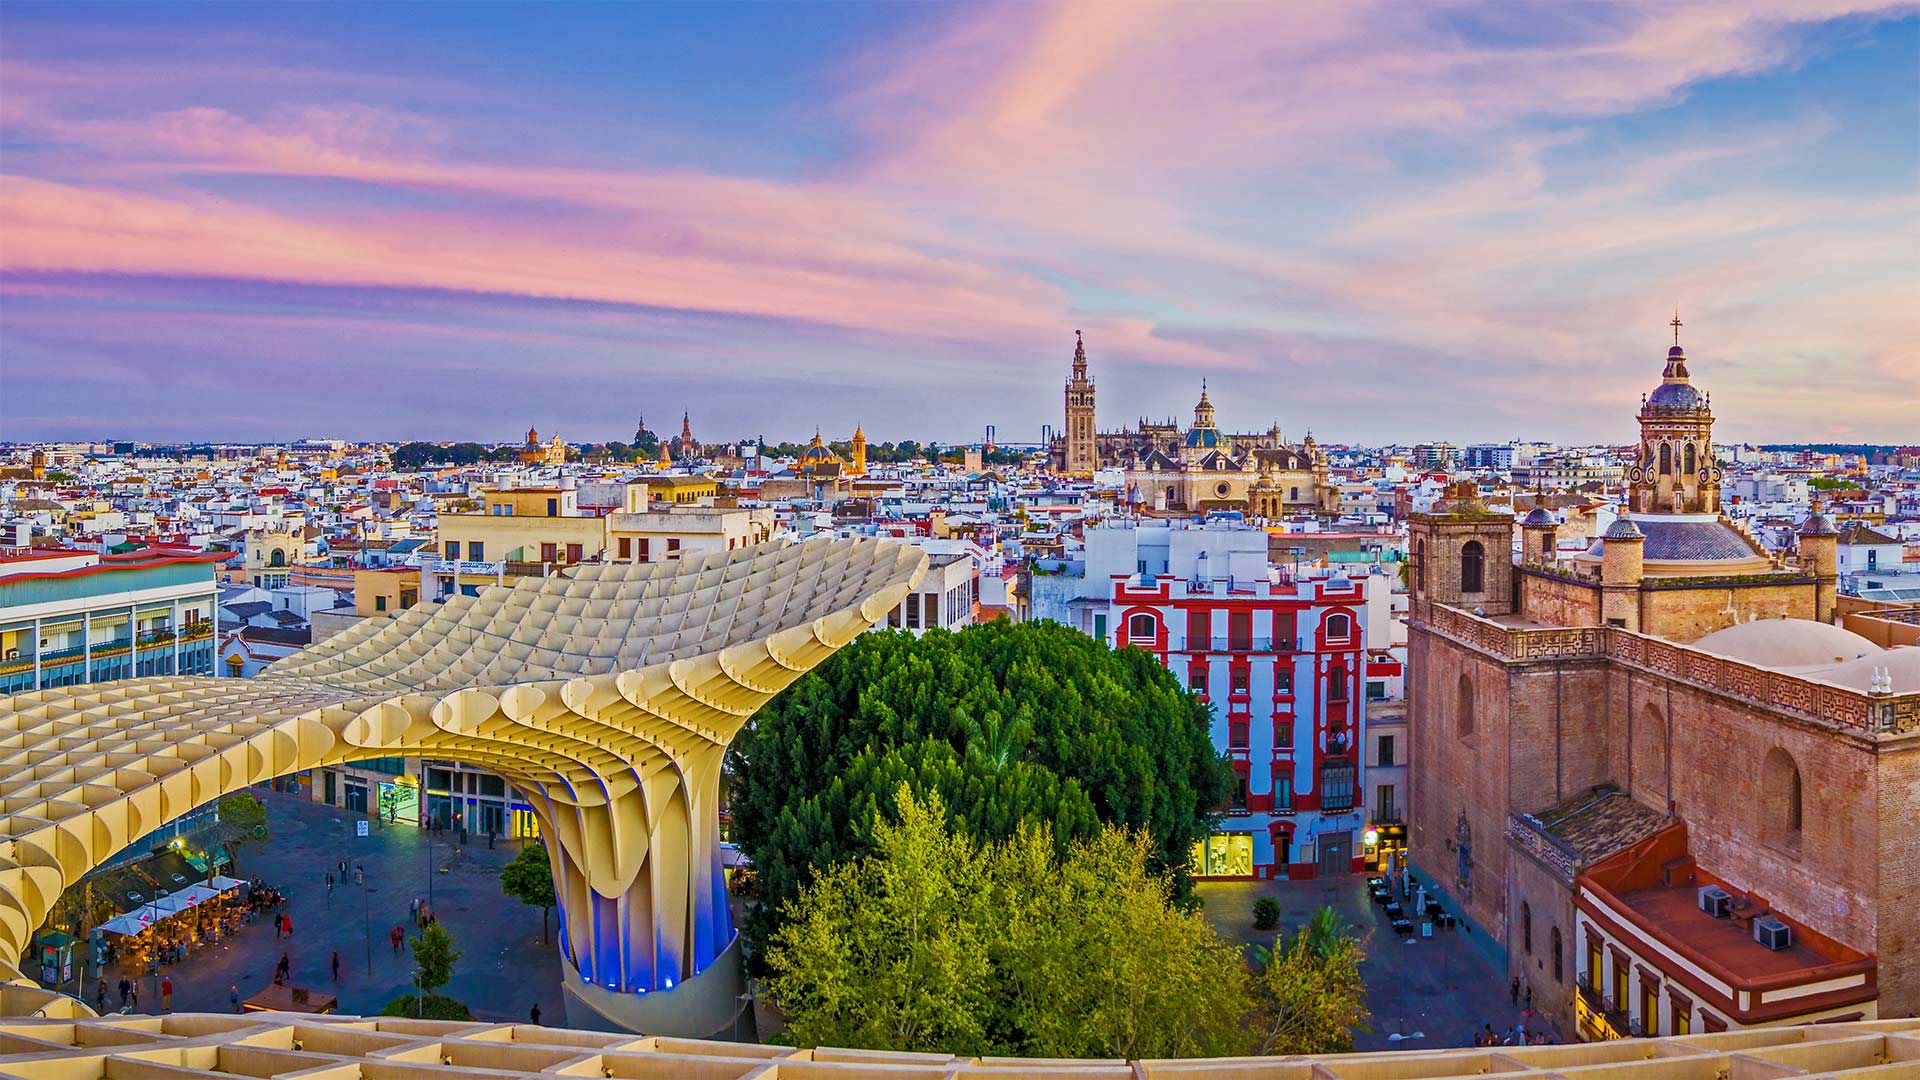 View of the city from the Setas de Sevilla (Metropol Parasol) in Seville